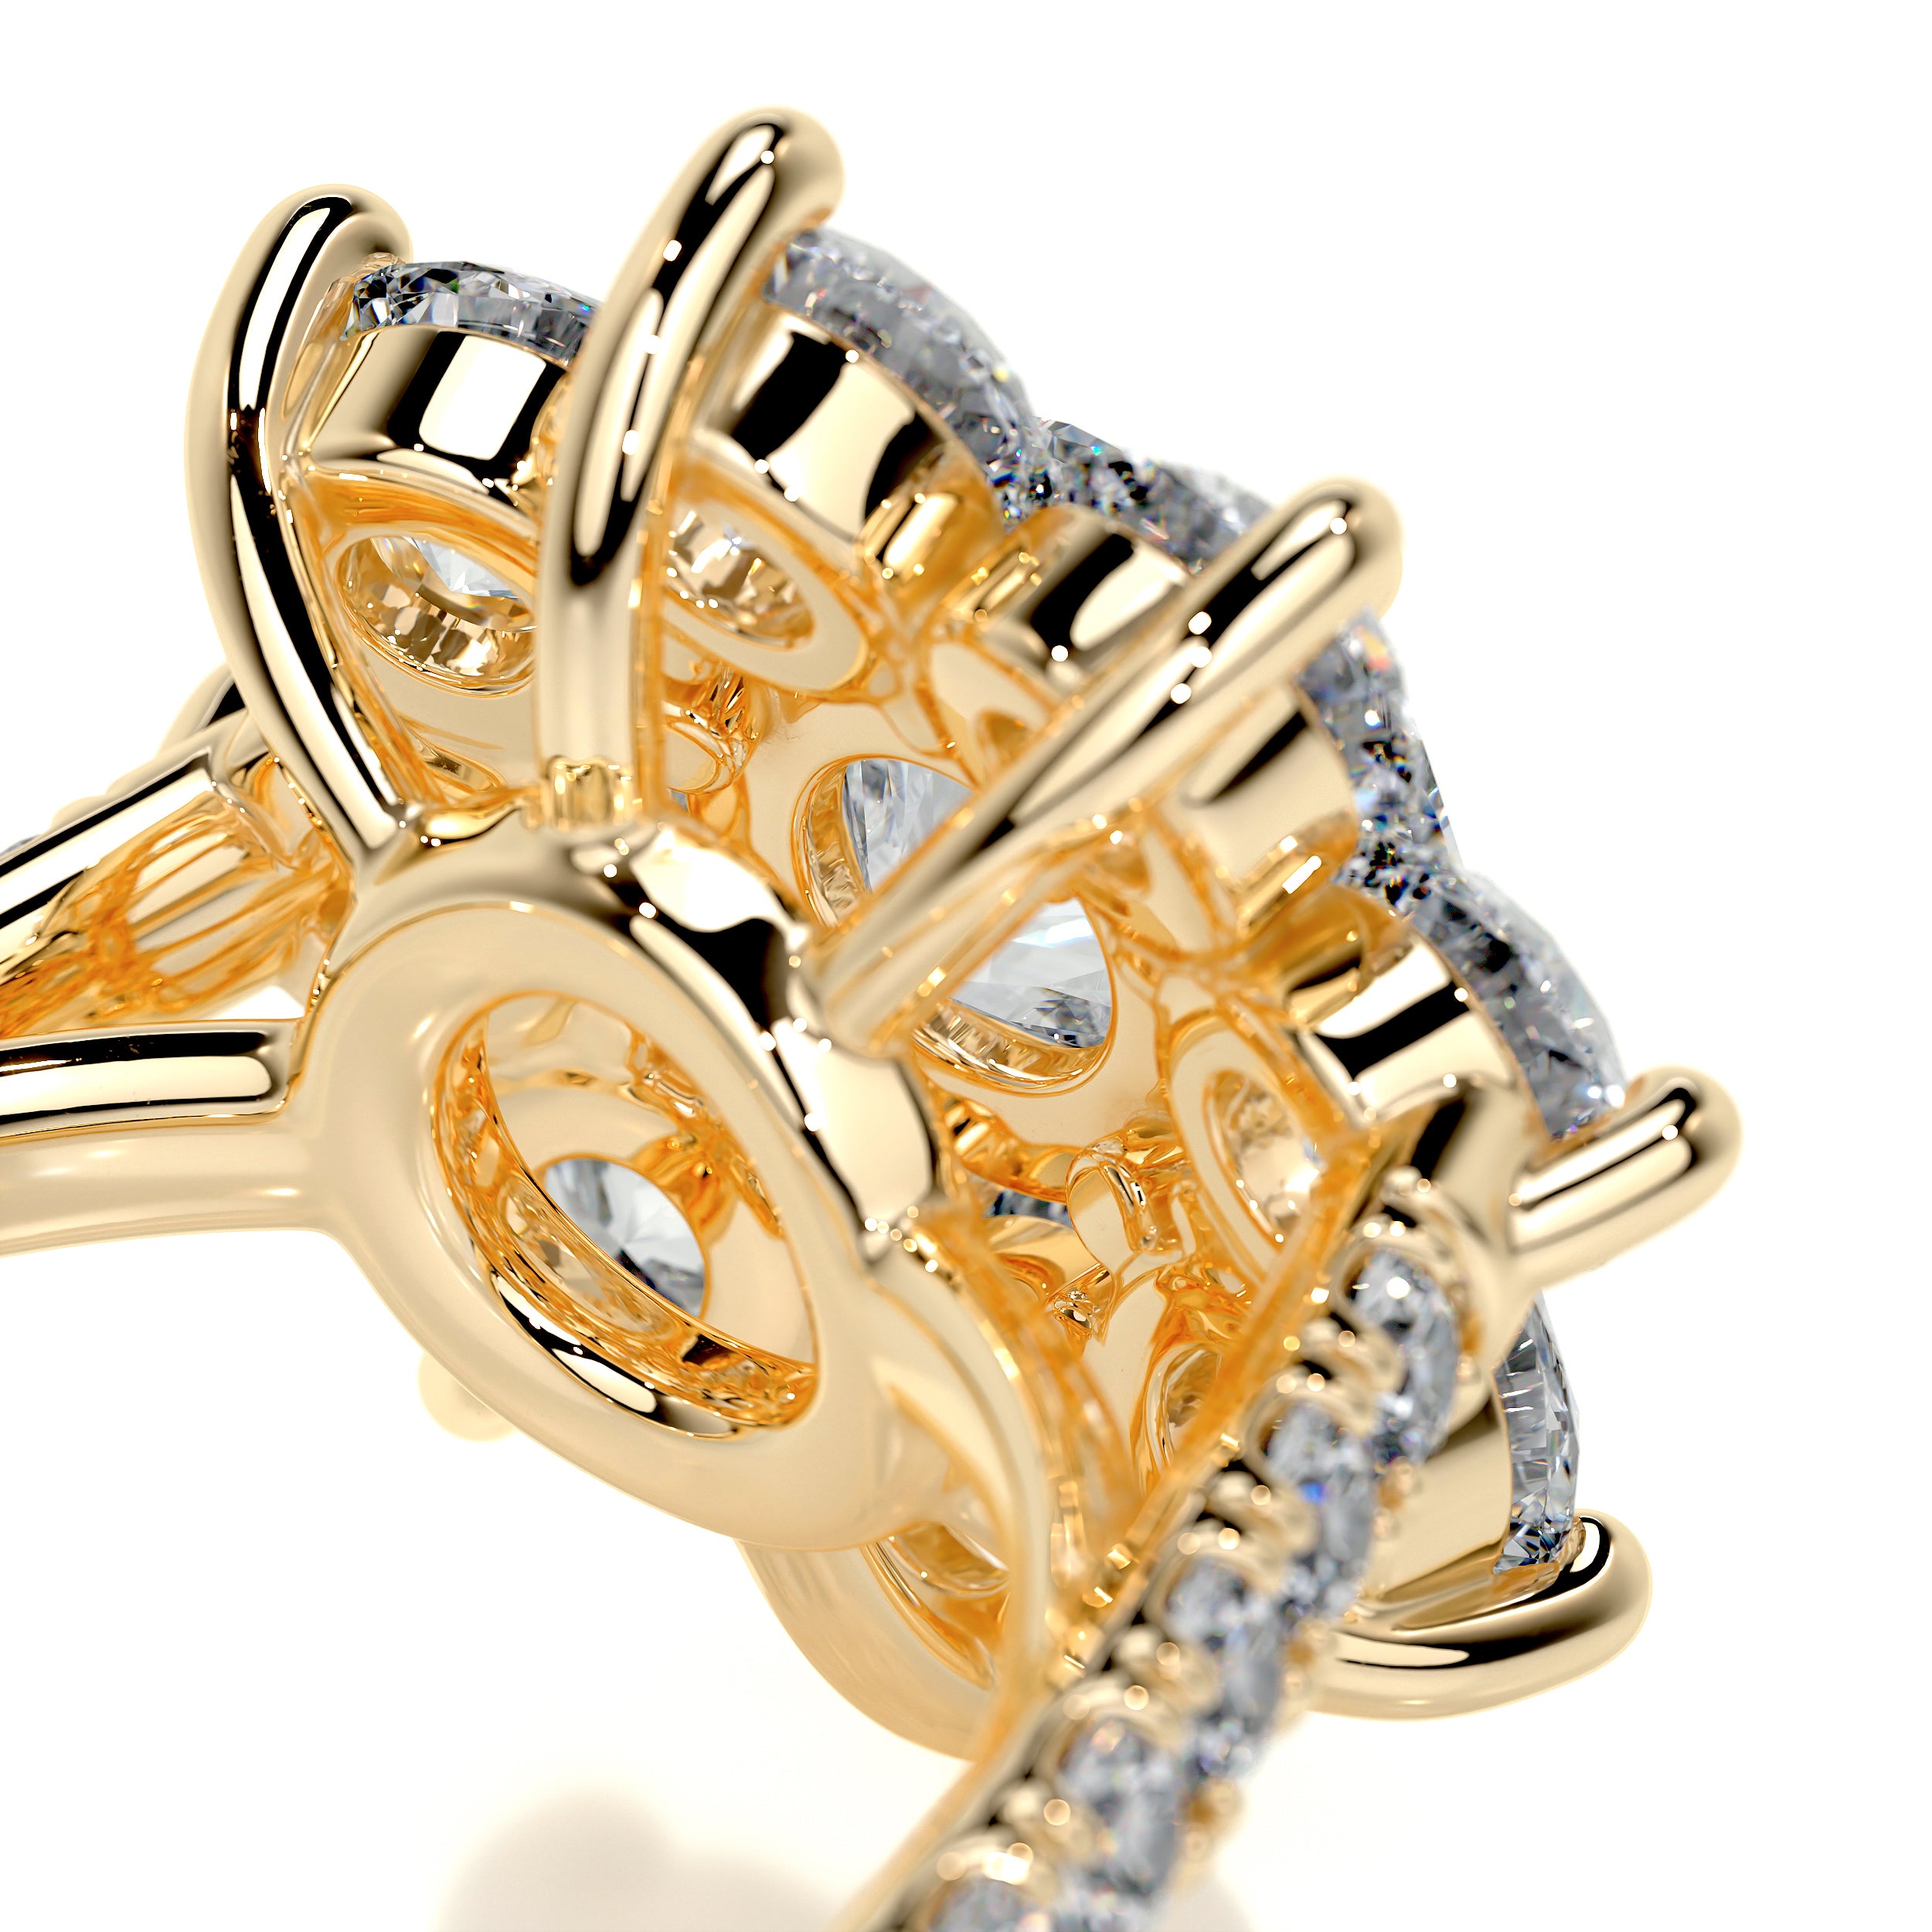 La Fleur Diamond Engagement Ring   (2.5 Carat) -18K Yellow Gold